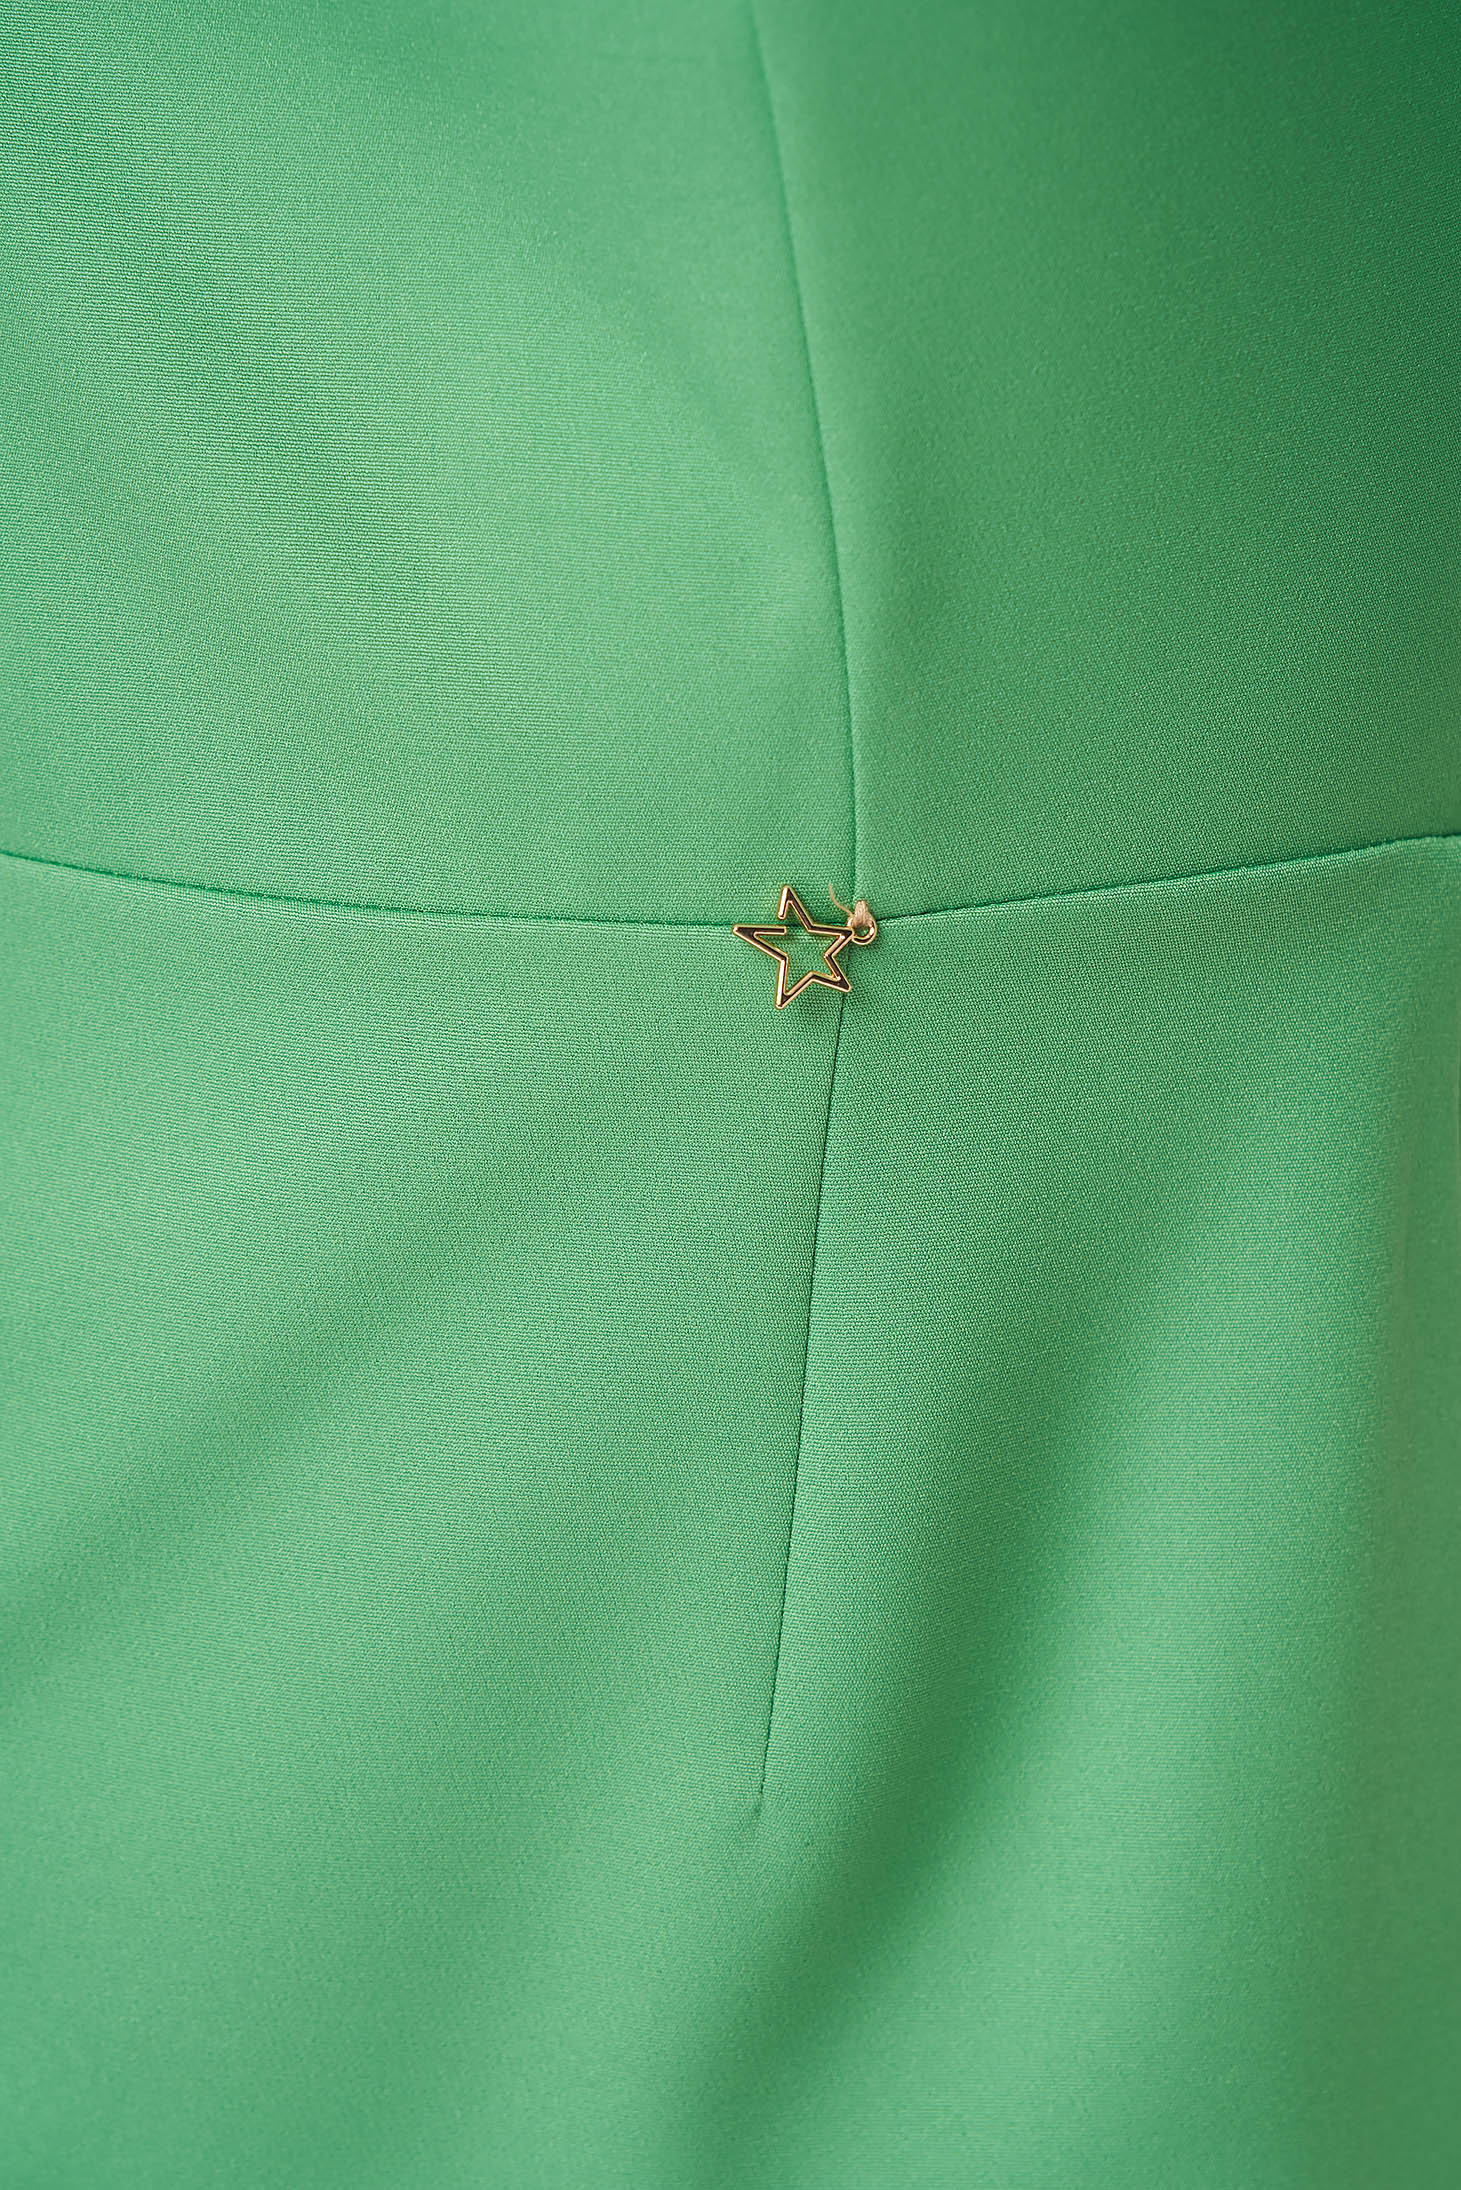 Világos zöld rövid ceruza ruha rugalmas szövetből - StarShinerS 6 - StarShinerS.hu